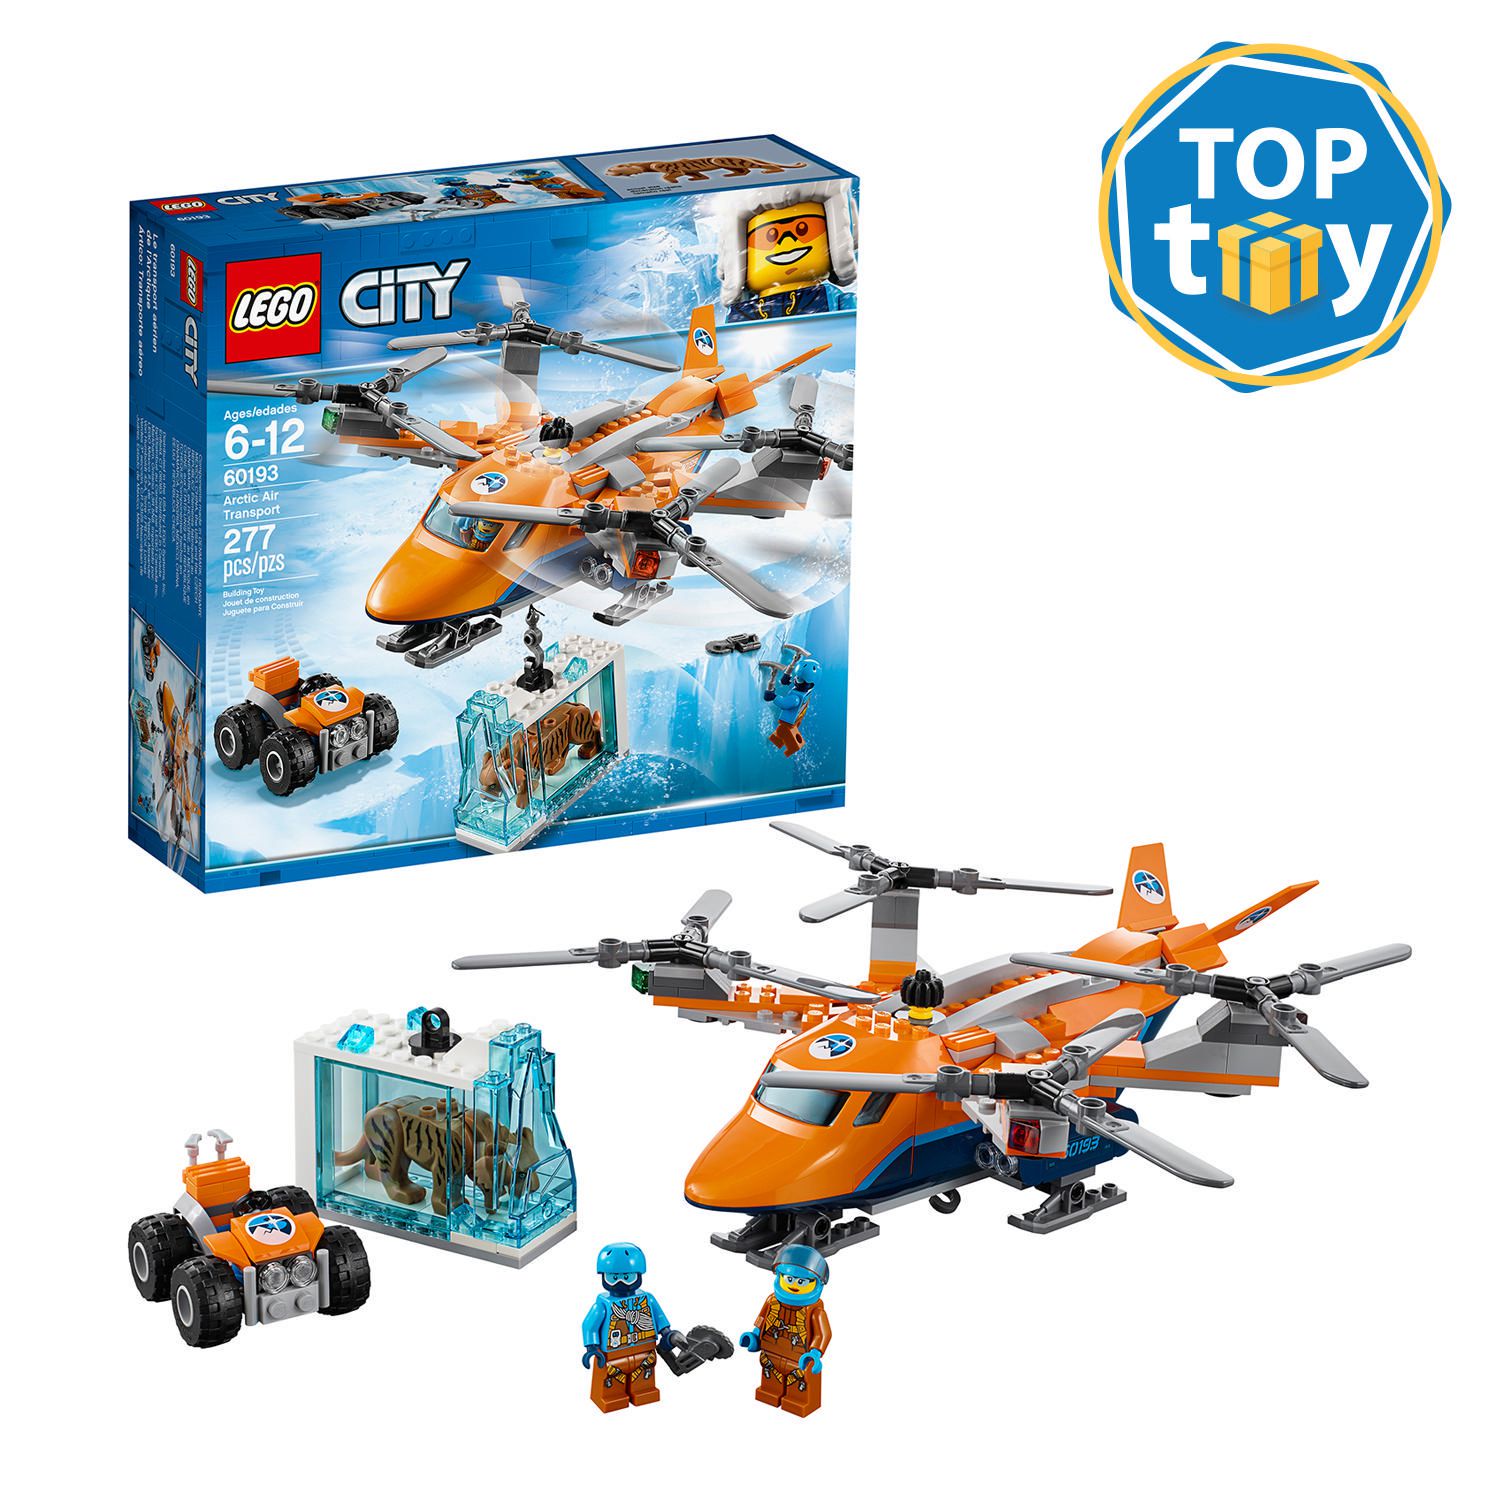 LEGO City Arctic Air Transport 60193 Building Kit (277 Piece